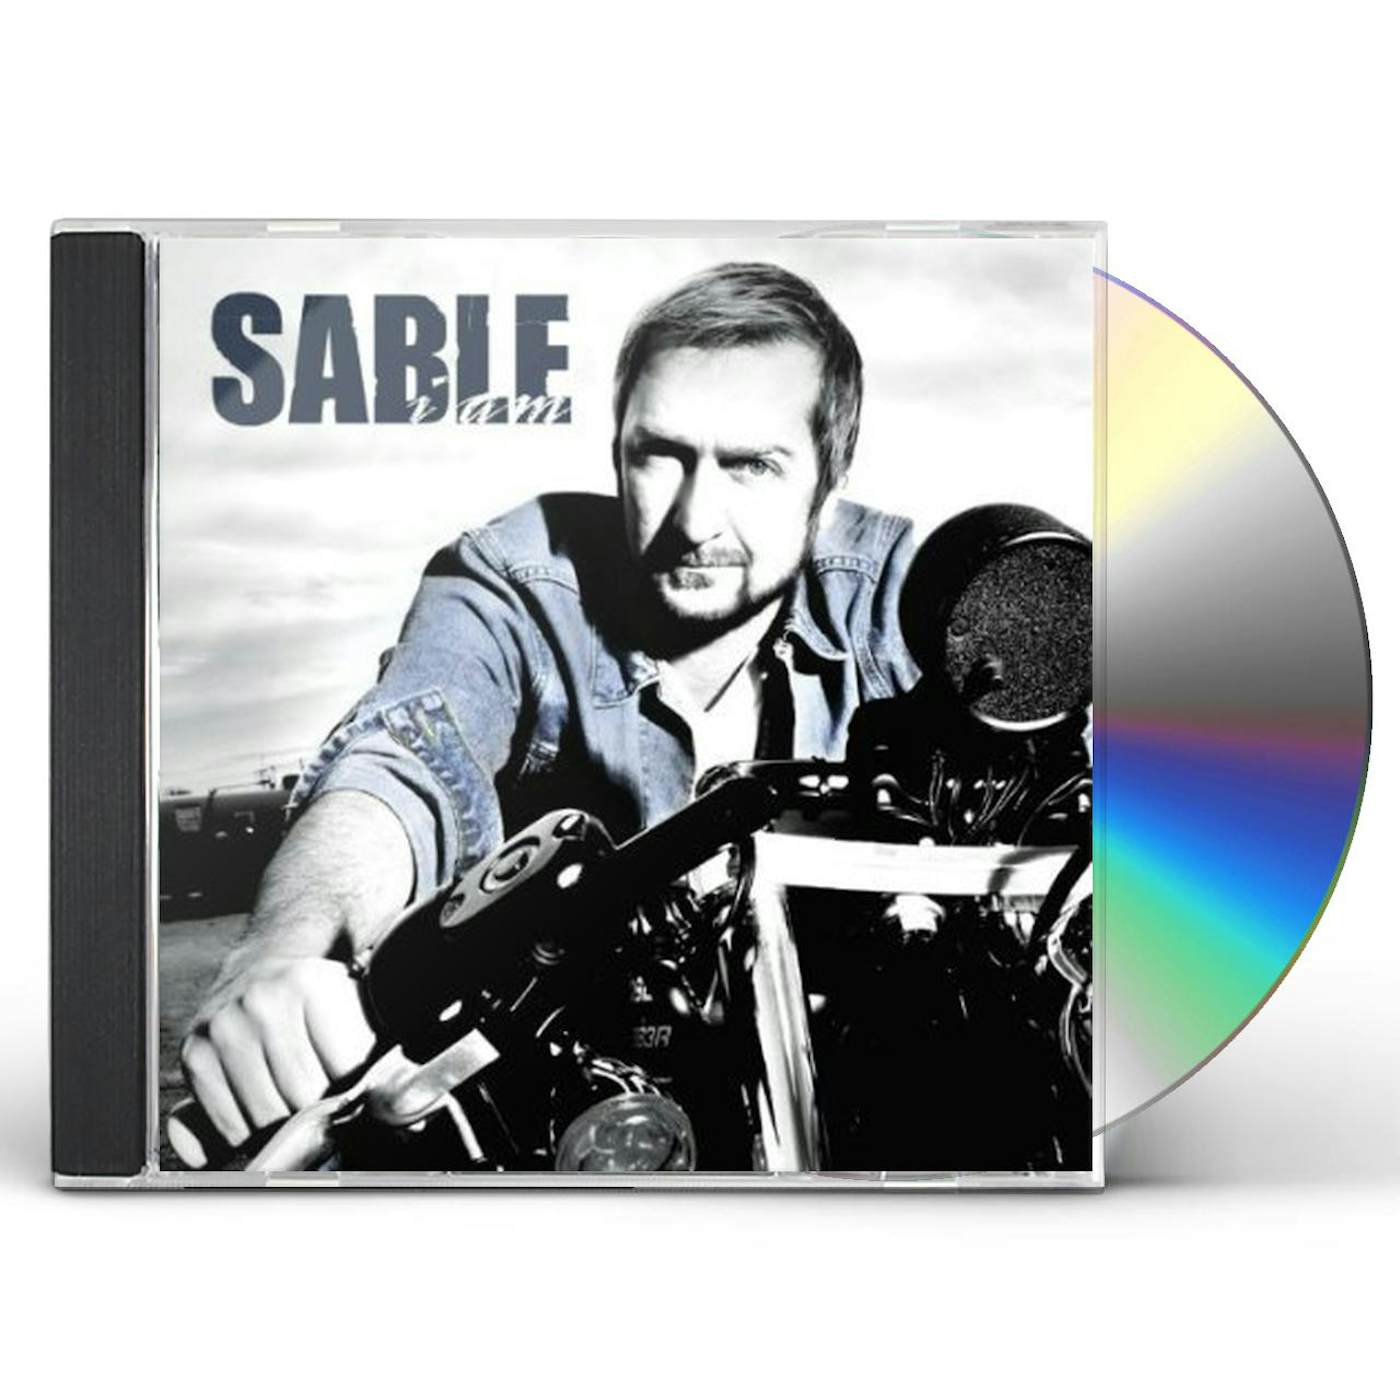 Sable I AM CD